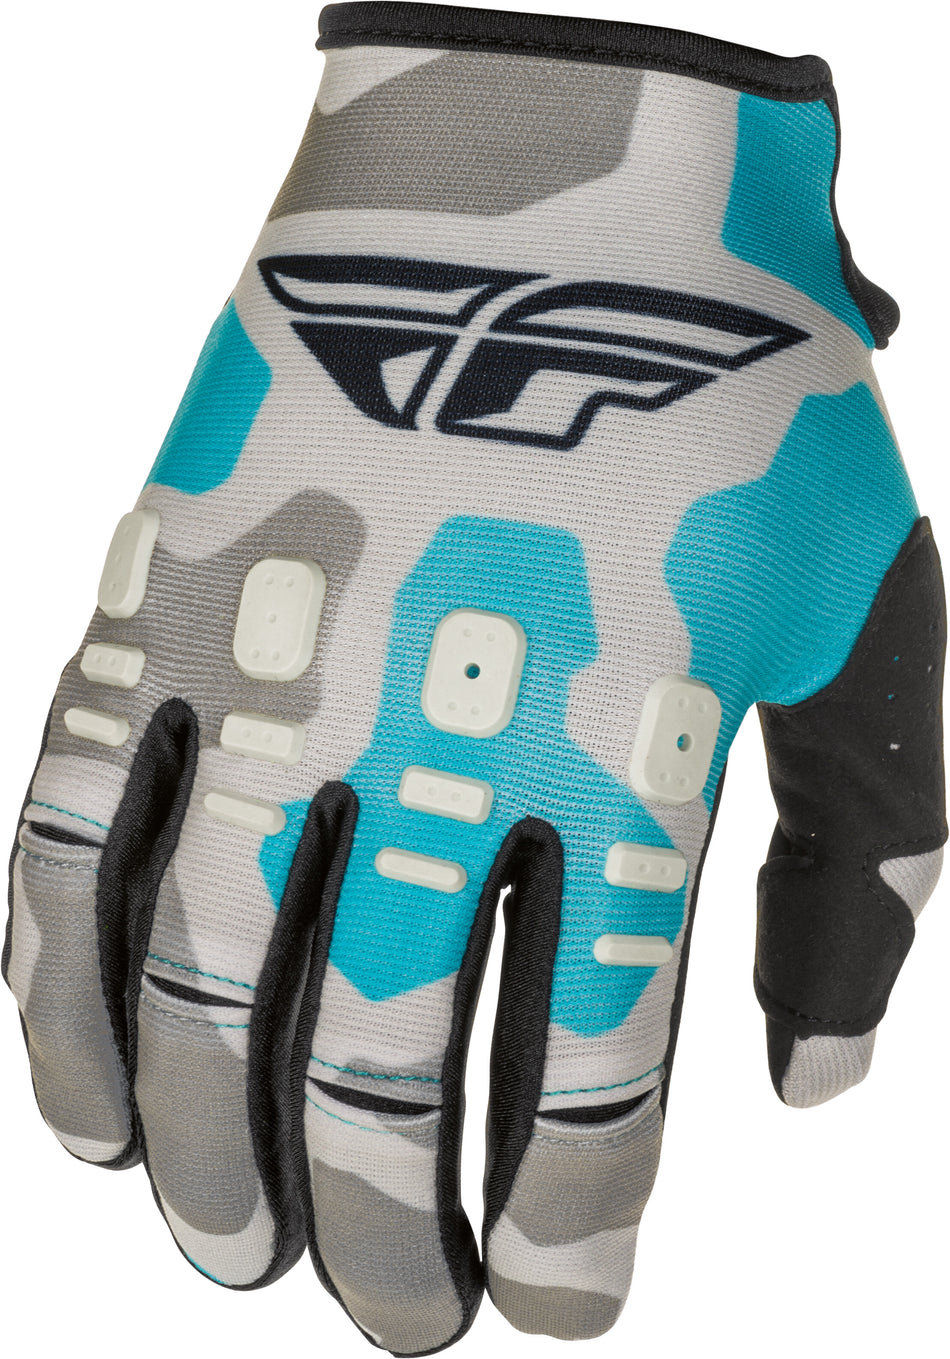 FLY RACING Kinetic K221 Gloves Grey/Blue Sz 09 374-51609